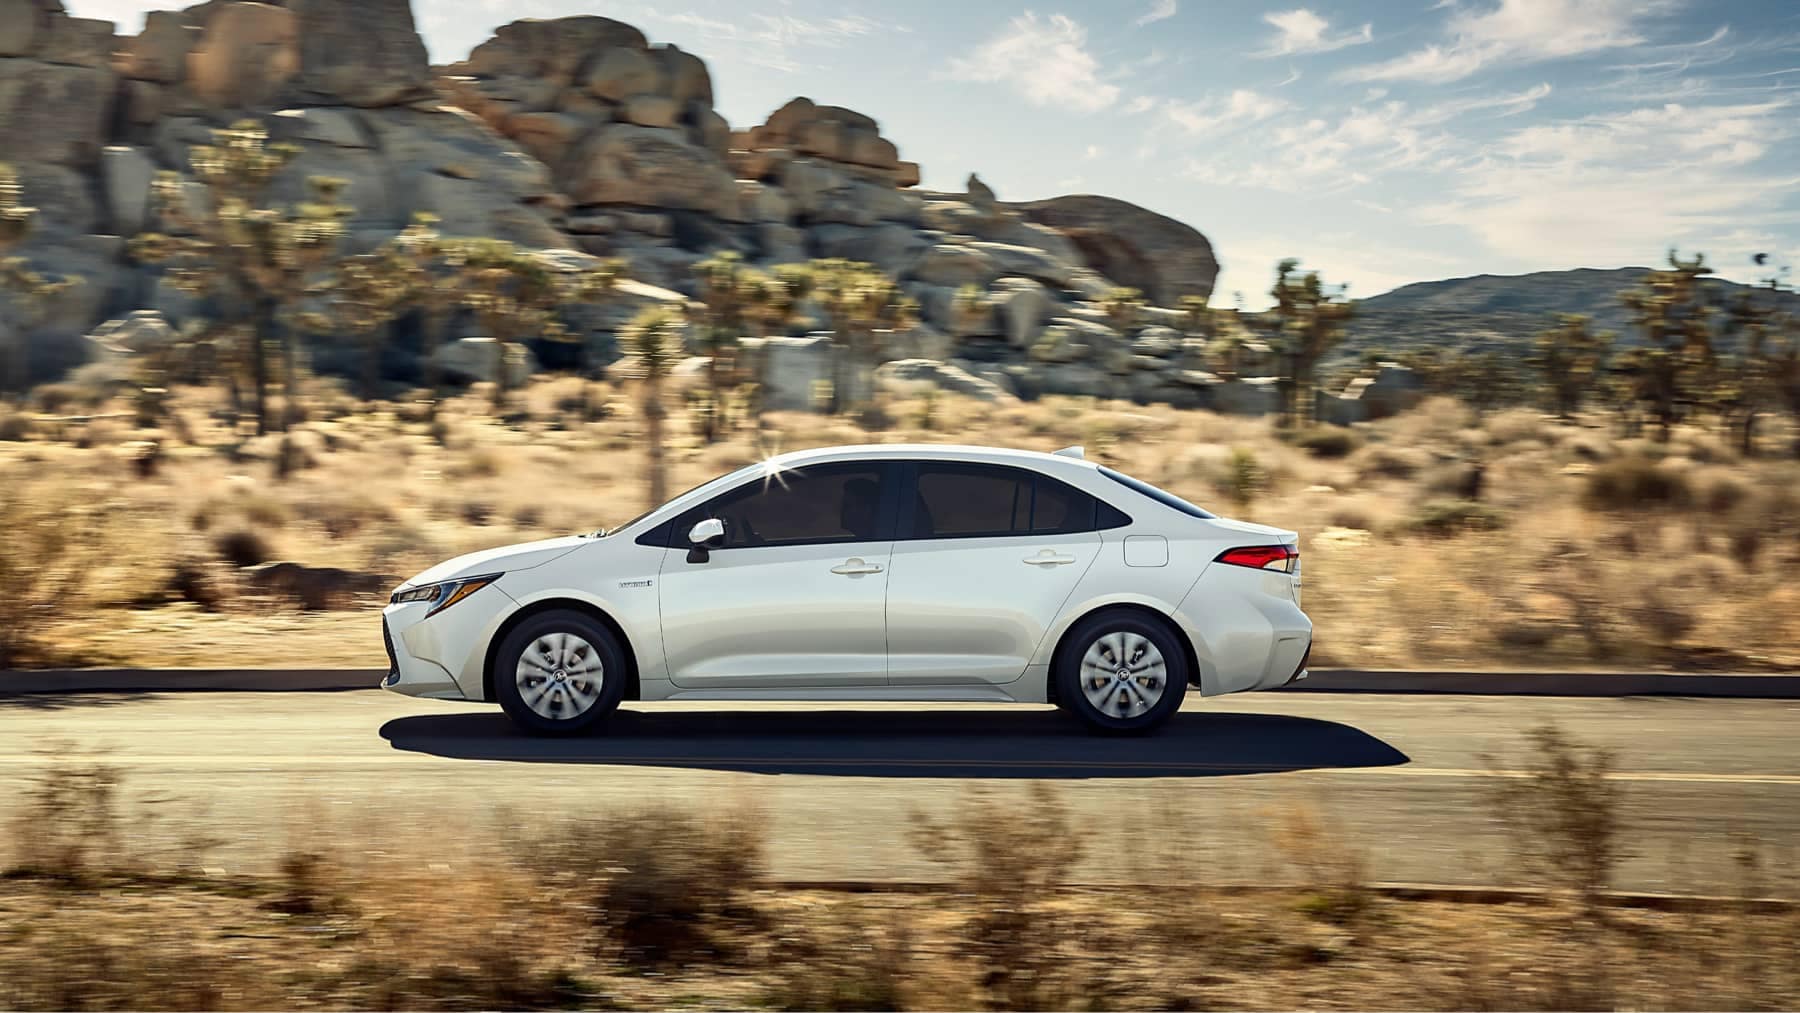 2021 Toyota Corolla speeding through a desert landscape